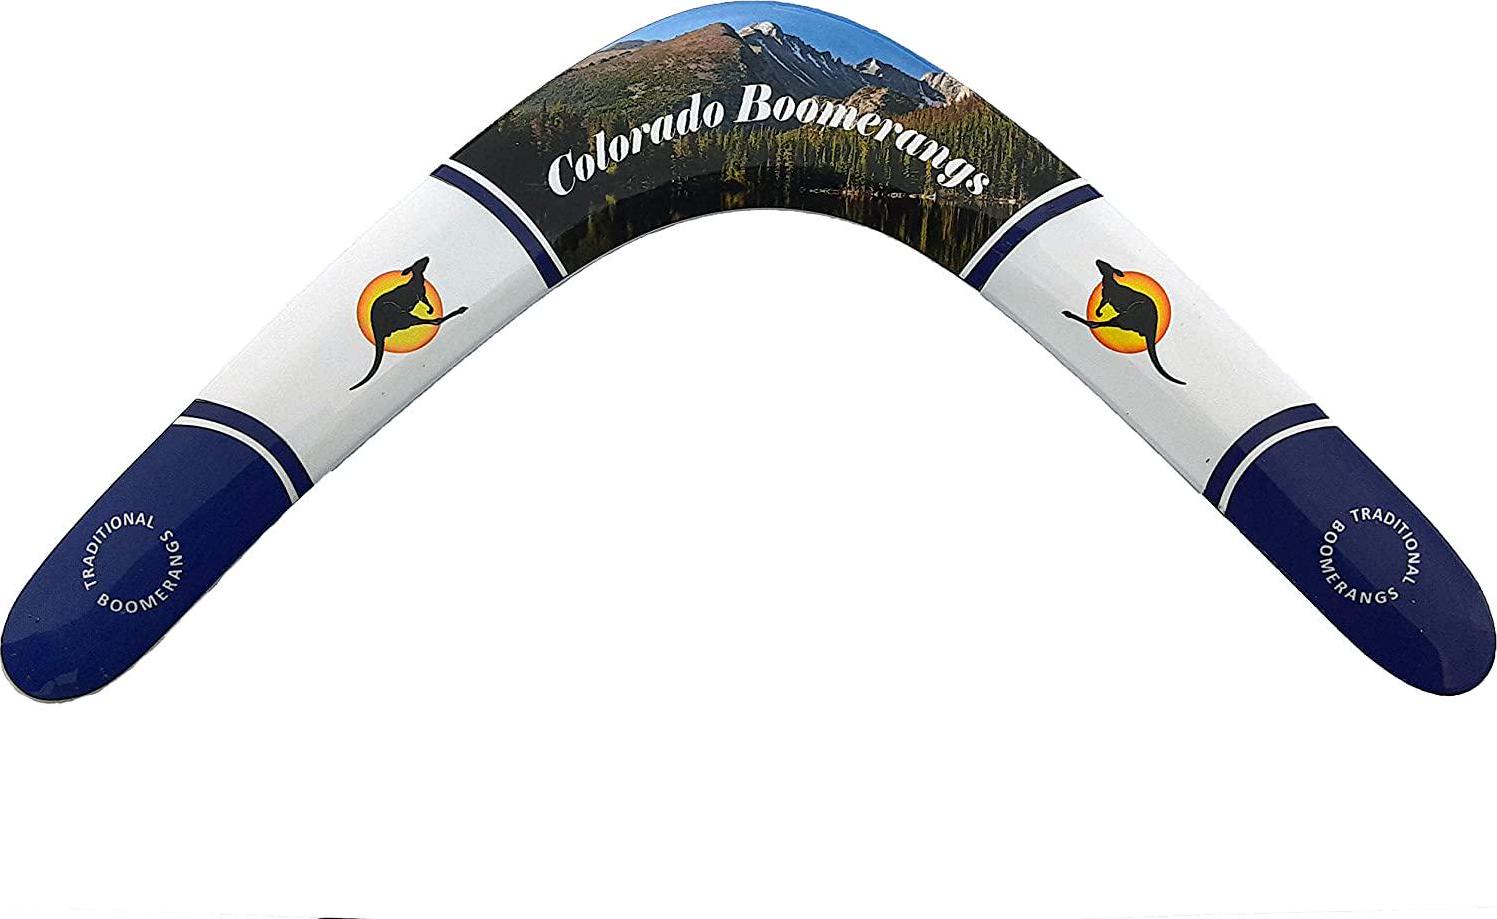 Colorado Boomerangs, Mandala Boomerang - Great Beginner Boomerangs for Kids Aged 13-70! A Real Returning Boomerang!